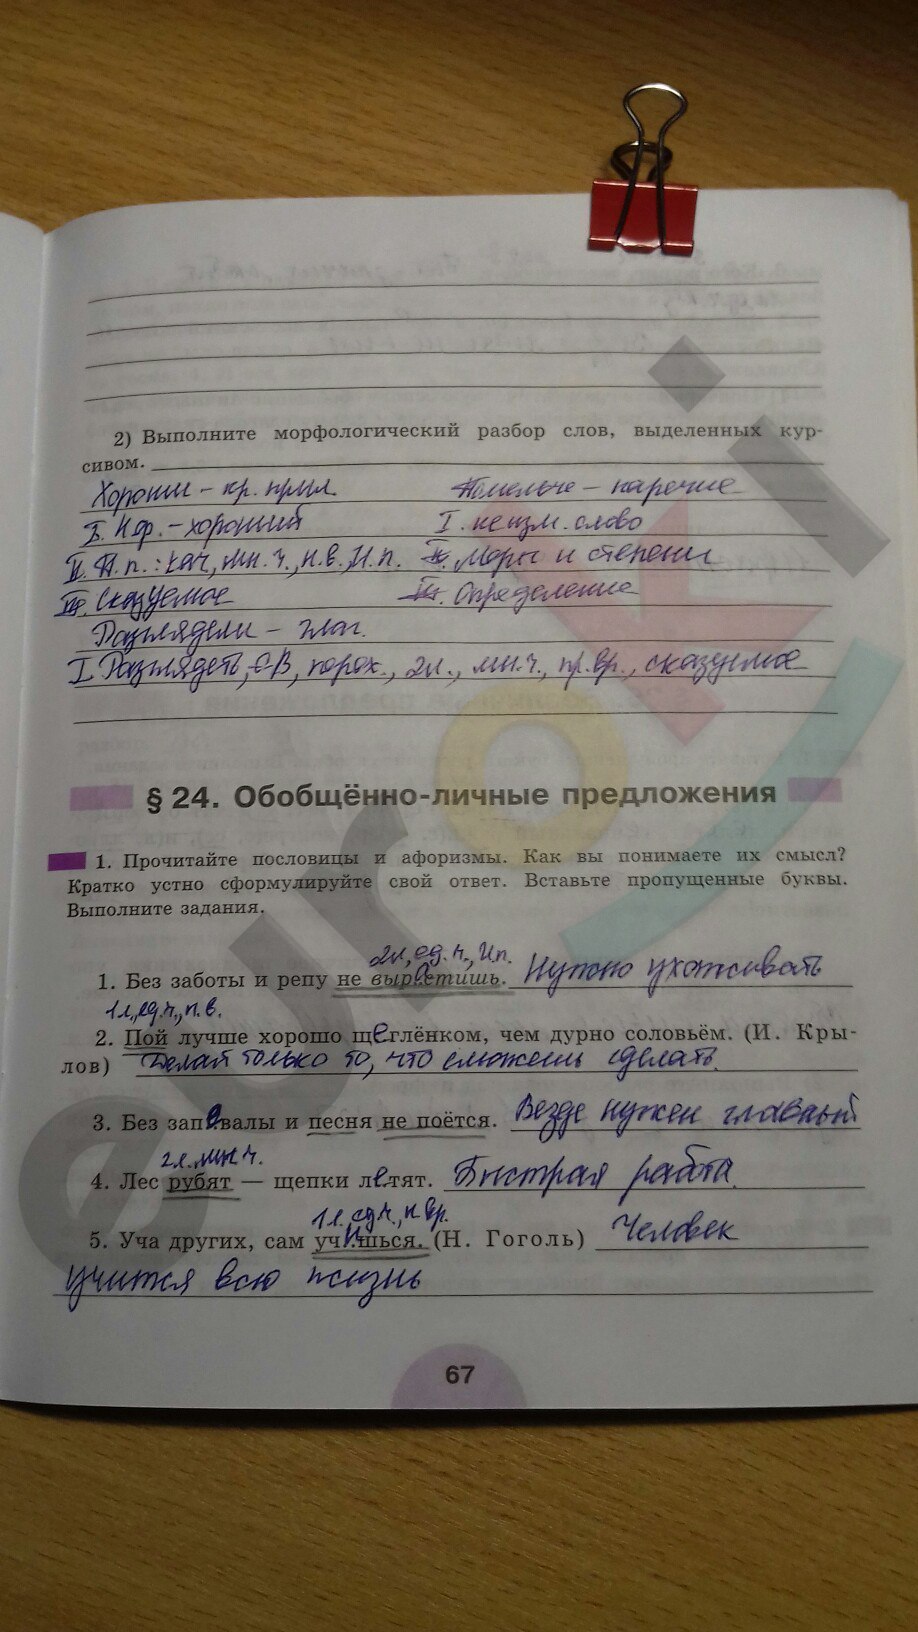 гдз 8 класс рабочая тетрадь часть 1 страница 67 русский язык Рыбченкова, Александрова